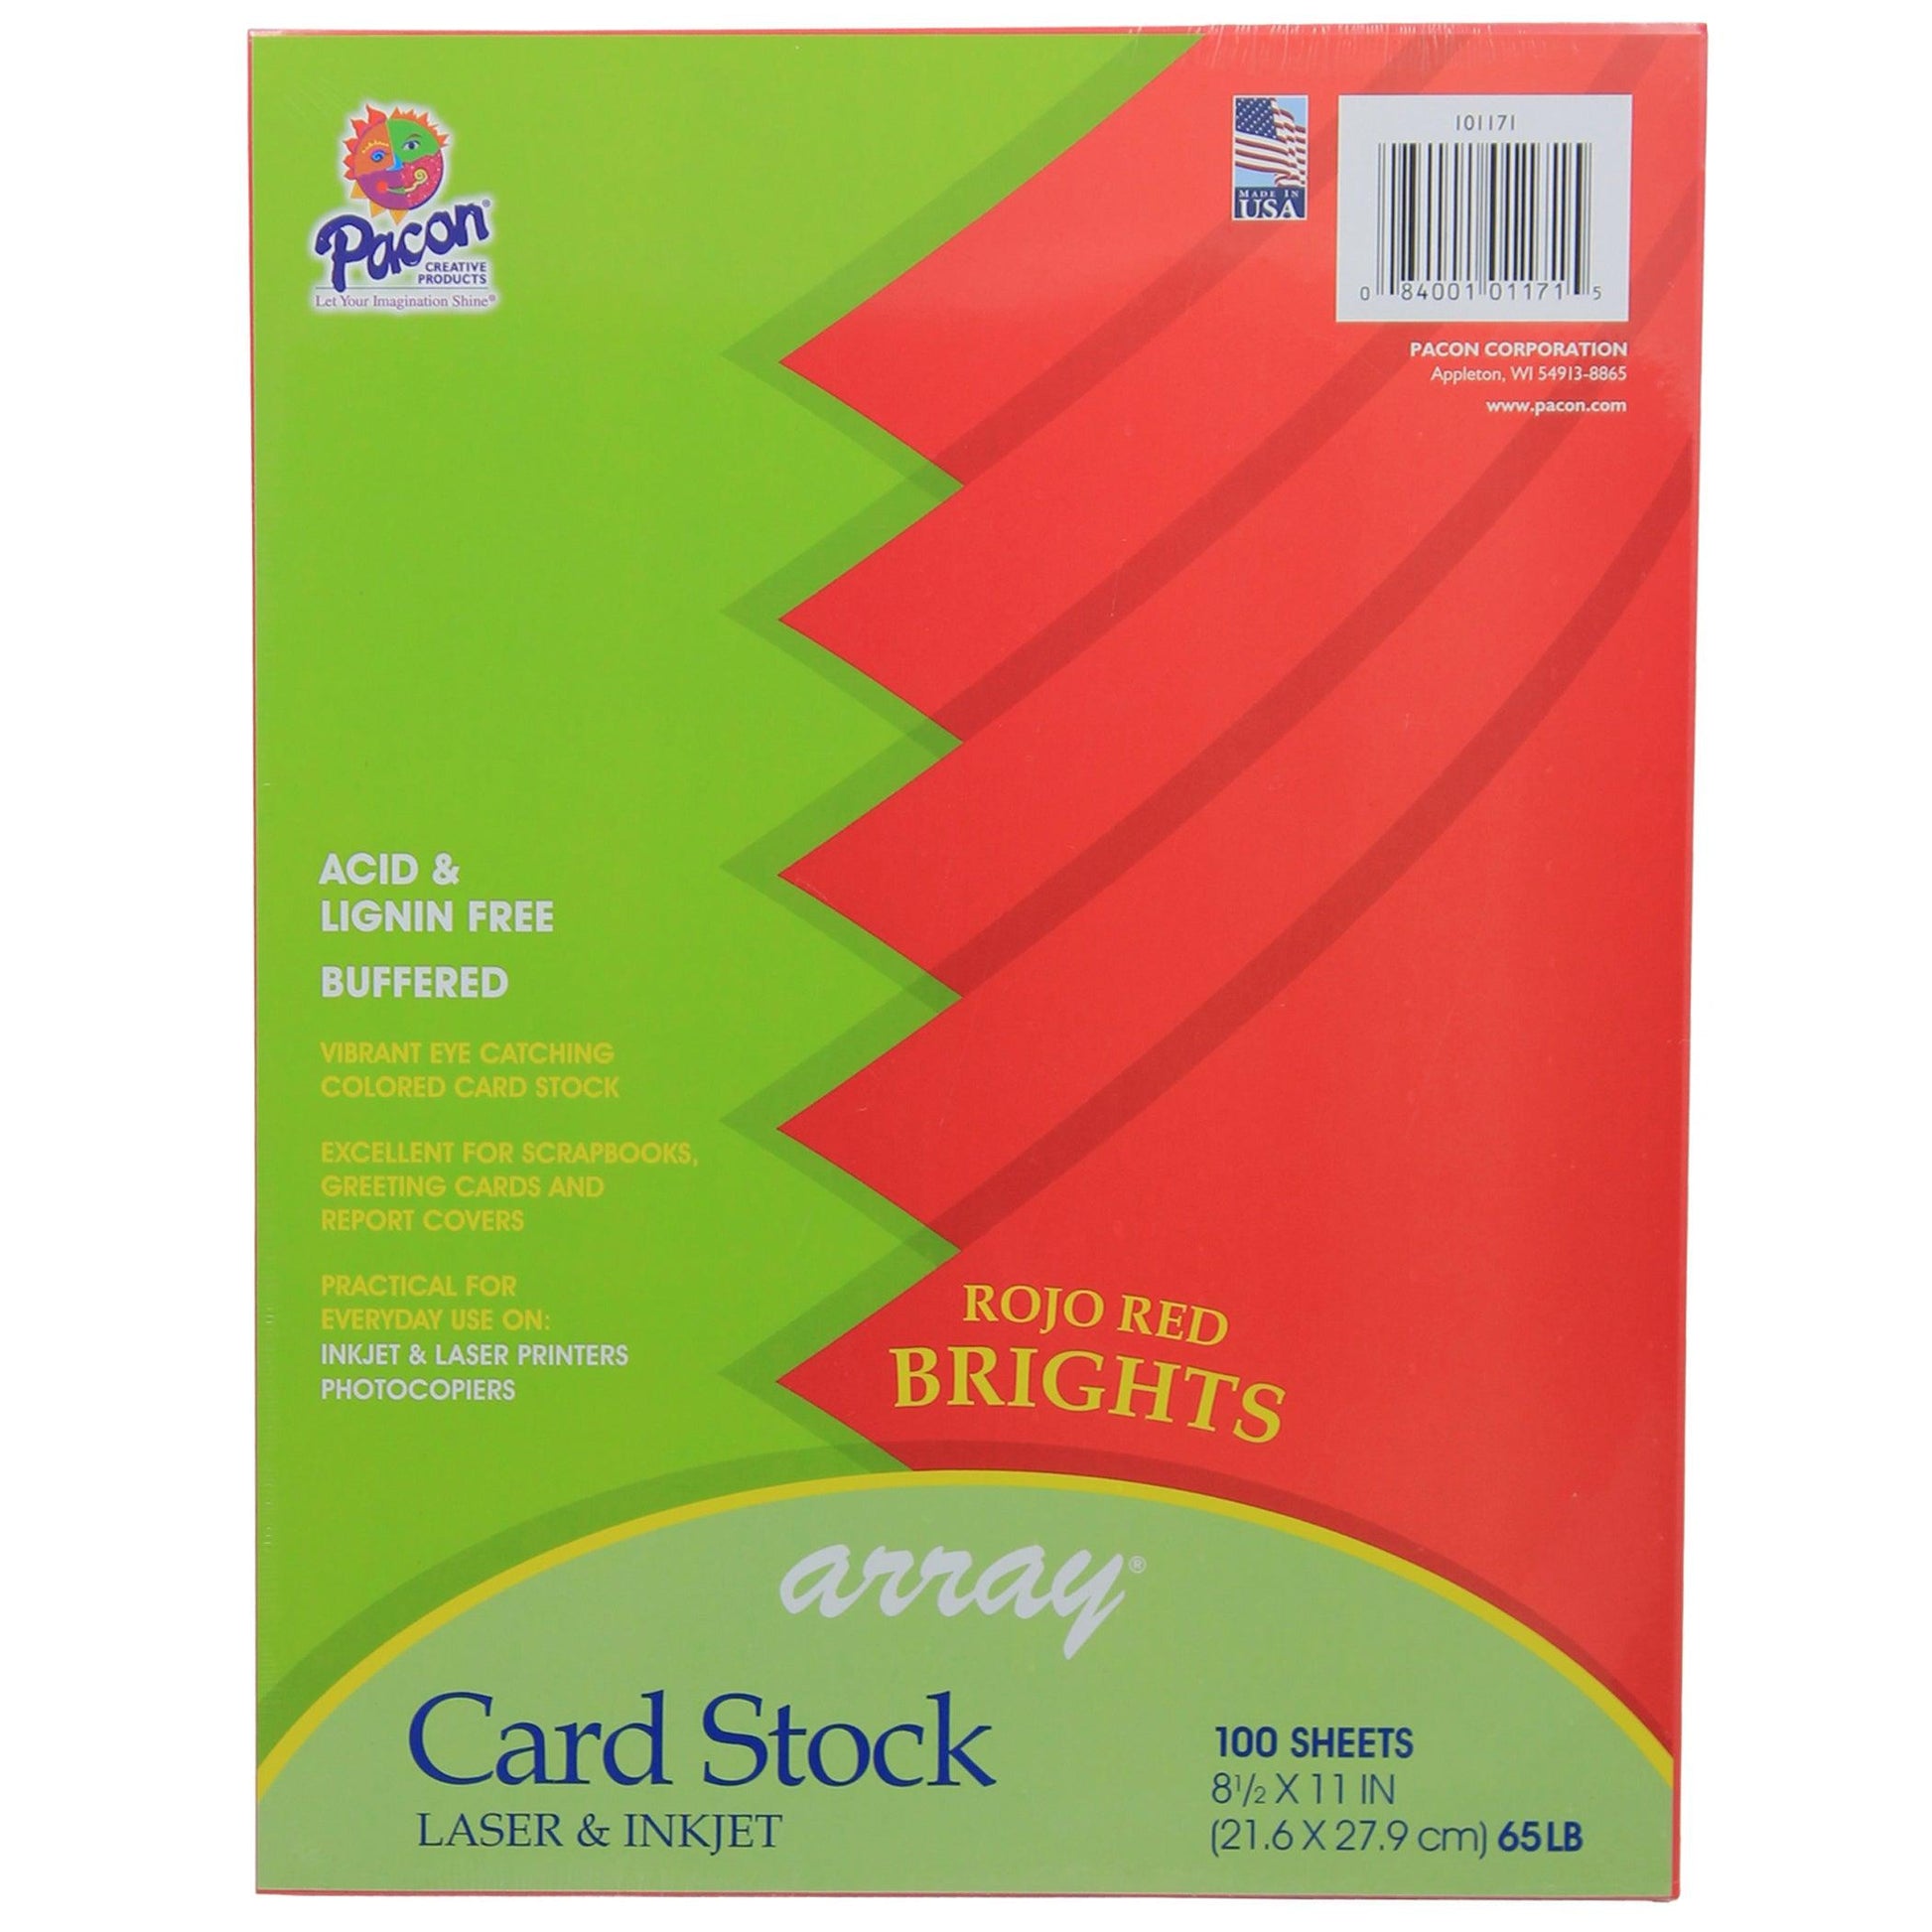 Card Stock, Rojo Red, 8-1/2" x 11", 100 Sheets - Loomini